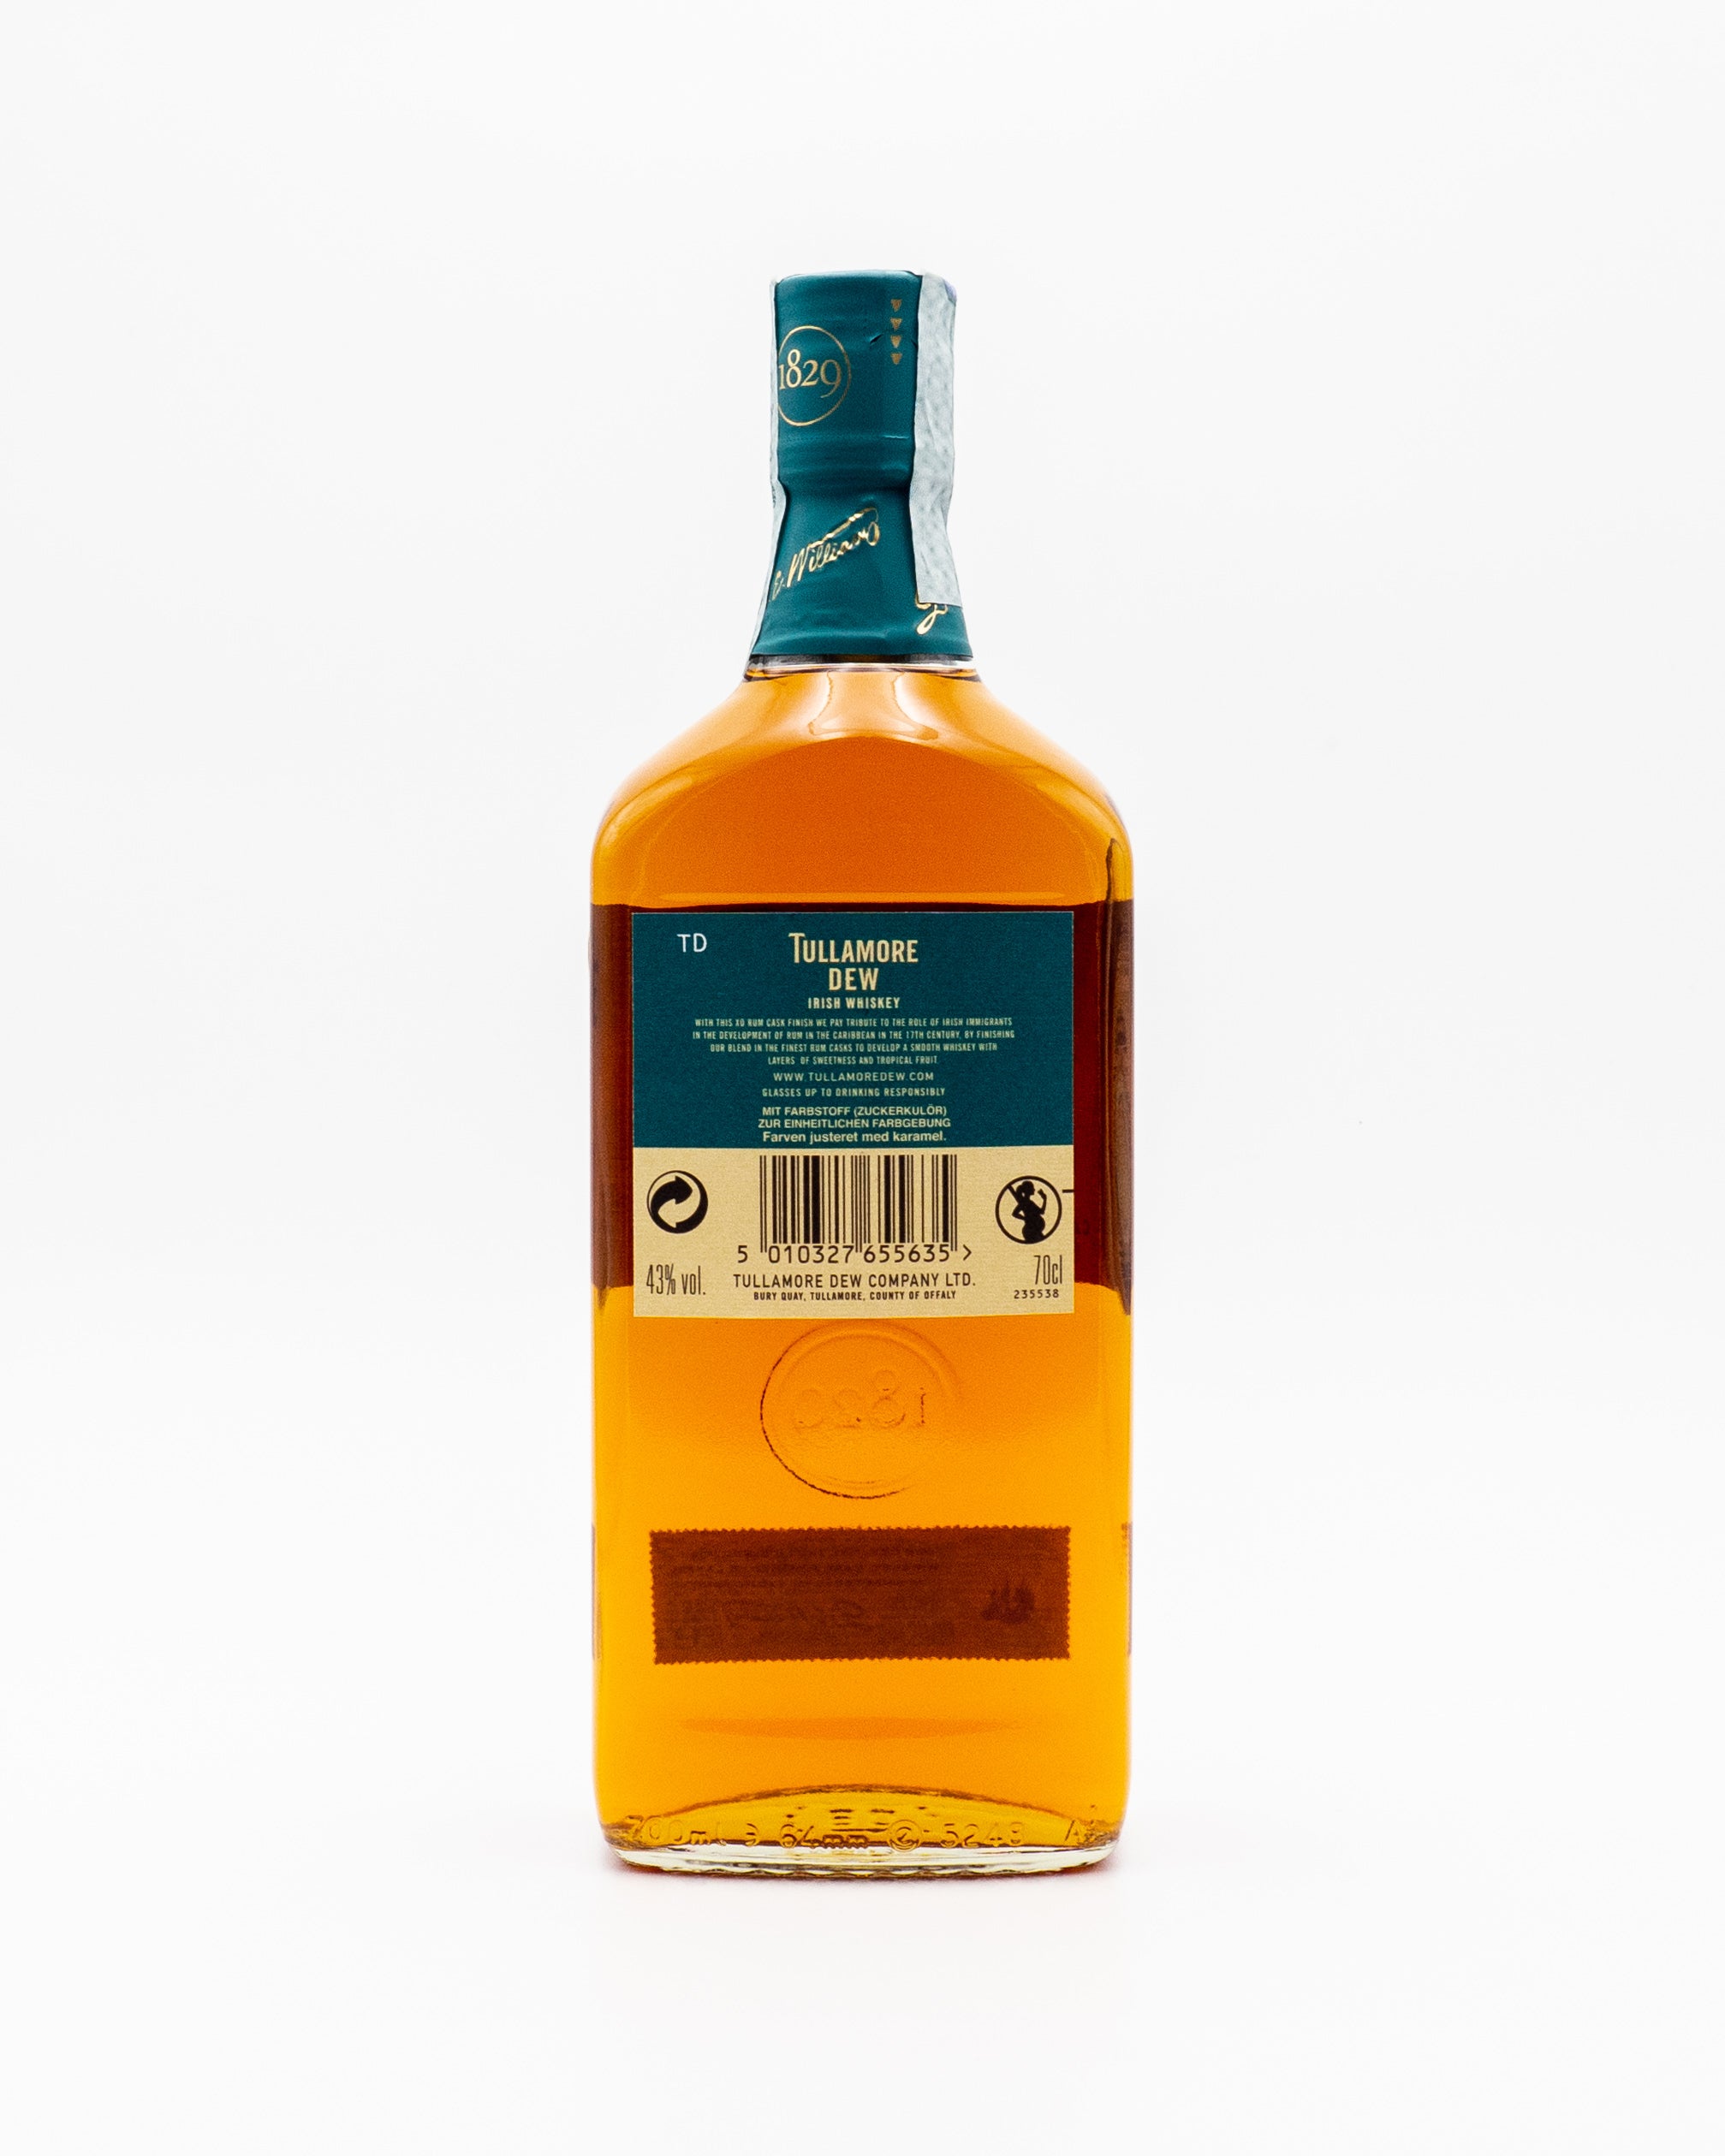 Tullamore D.E.W. Irish Whiskey XO Caribbean Rum Cask Finish - Tullamore